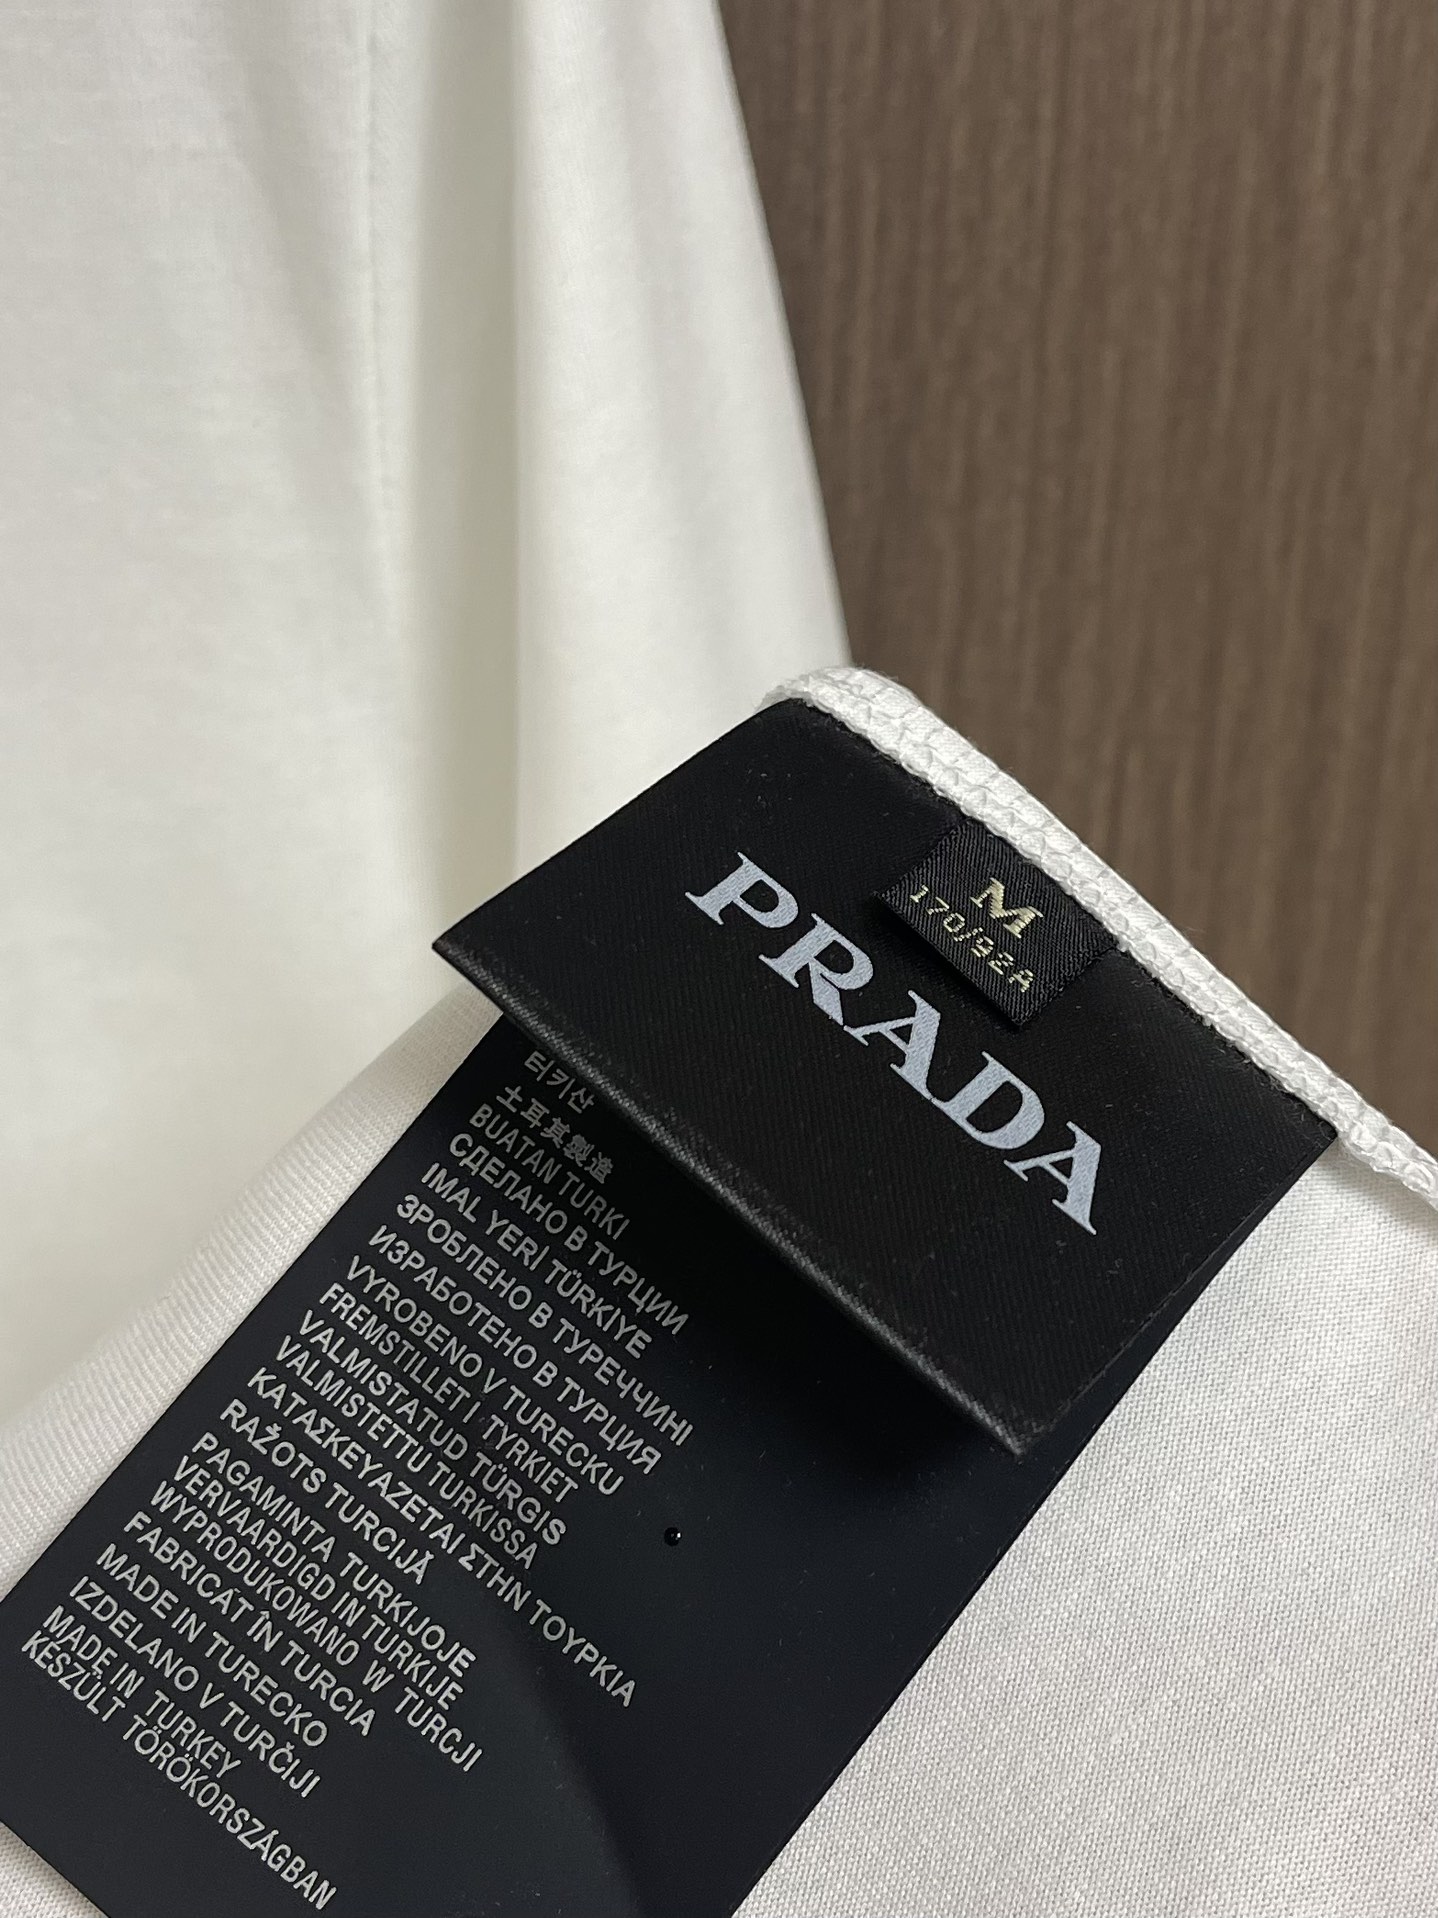 Prada经典款logo胶印圆领T恤优雅气质的裁剪设计,标志性的经典版型客供纯棉面料,透气舒适感极佳柔软